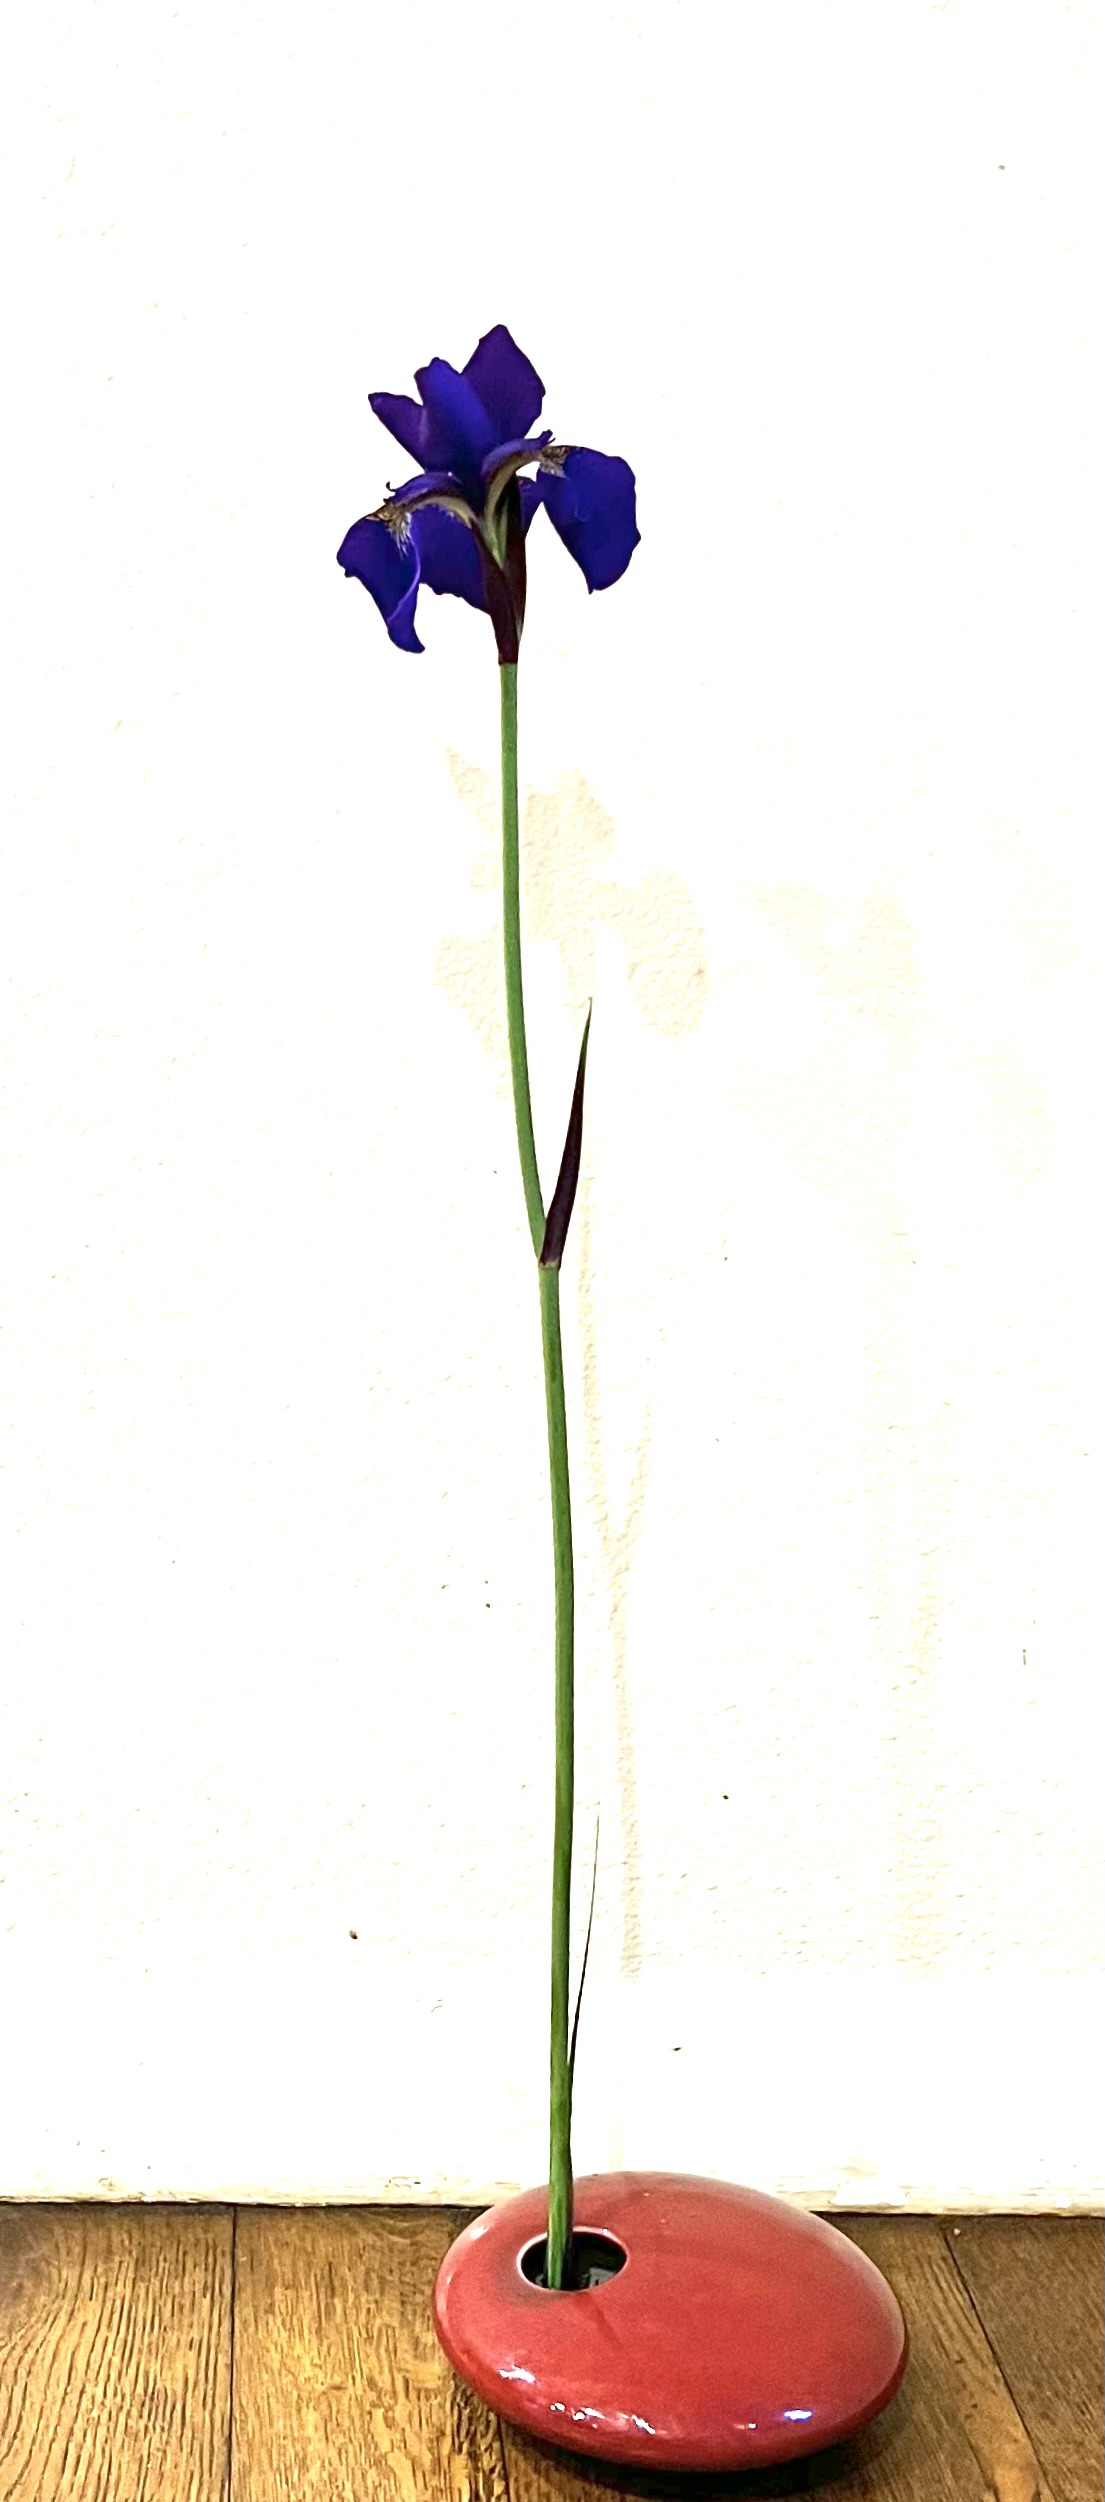 Iris sanguinea 'Kamayama' 1 stalk